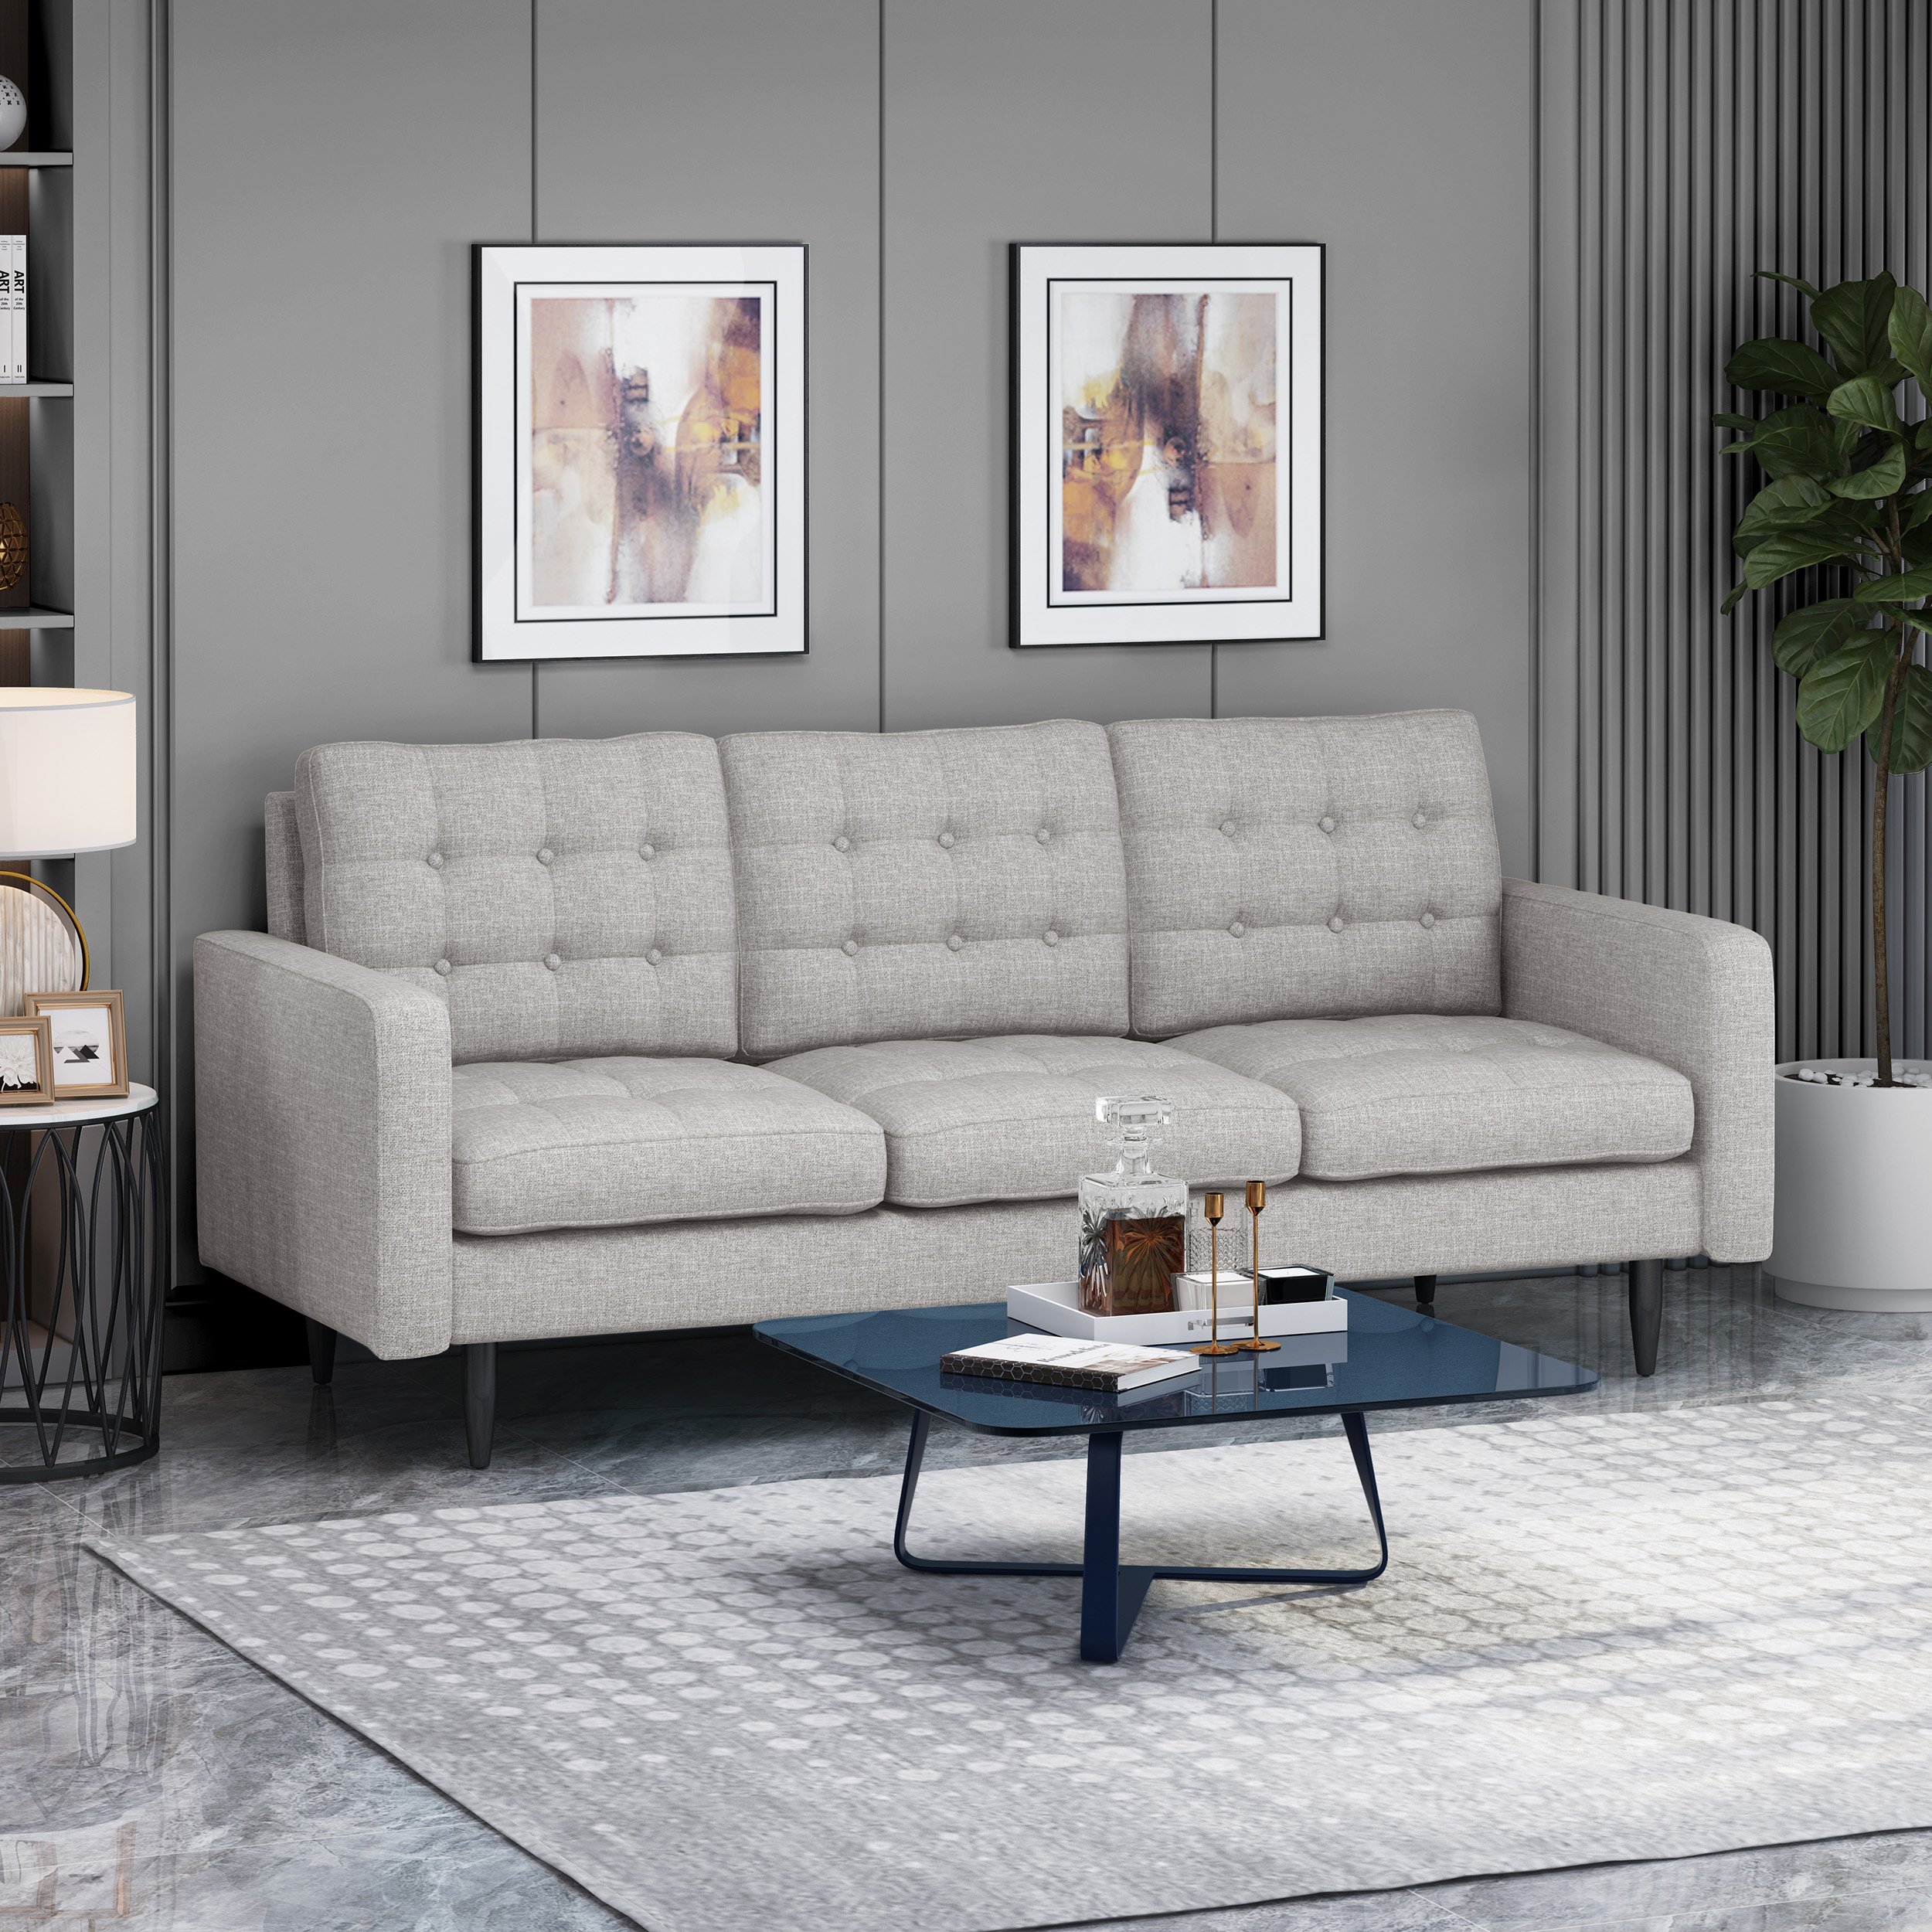 Jenny Contemporary Tufted Fabric 3 Seater Sofa - Light Gray + Dark Brown